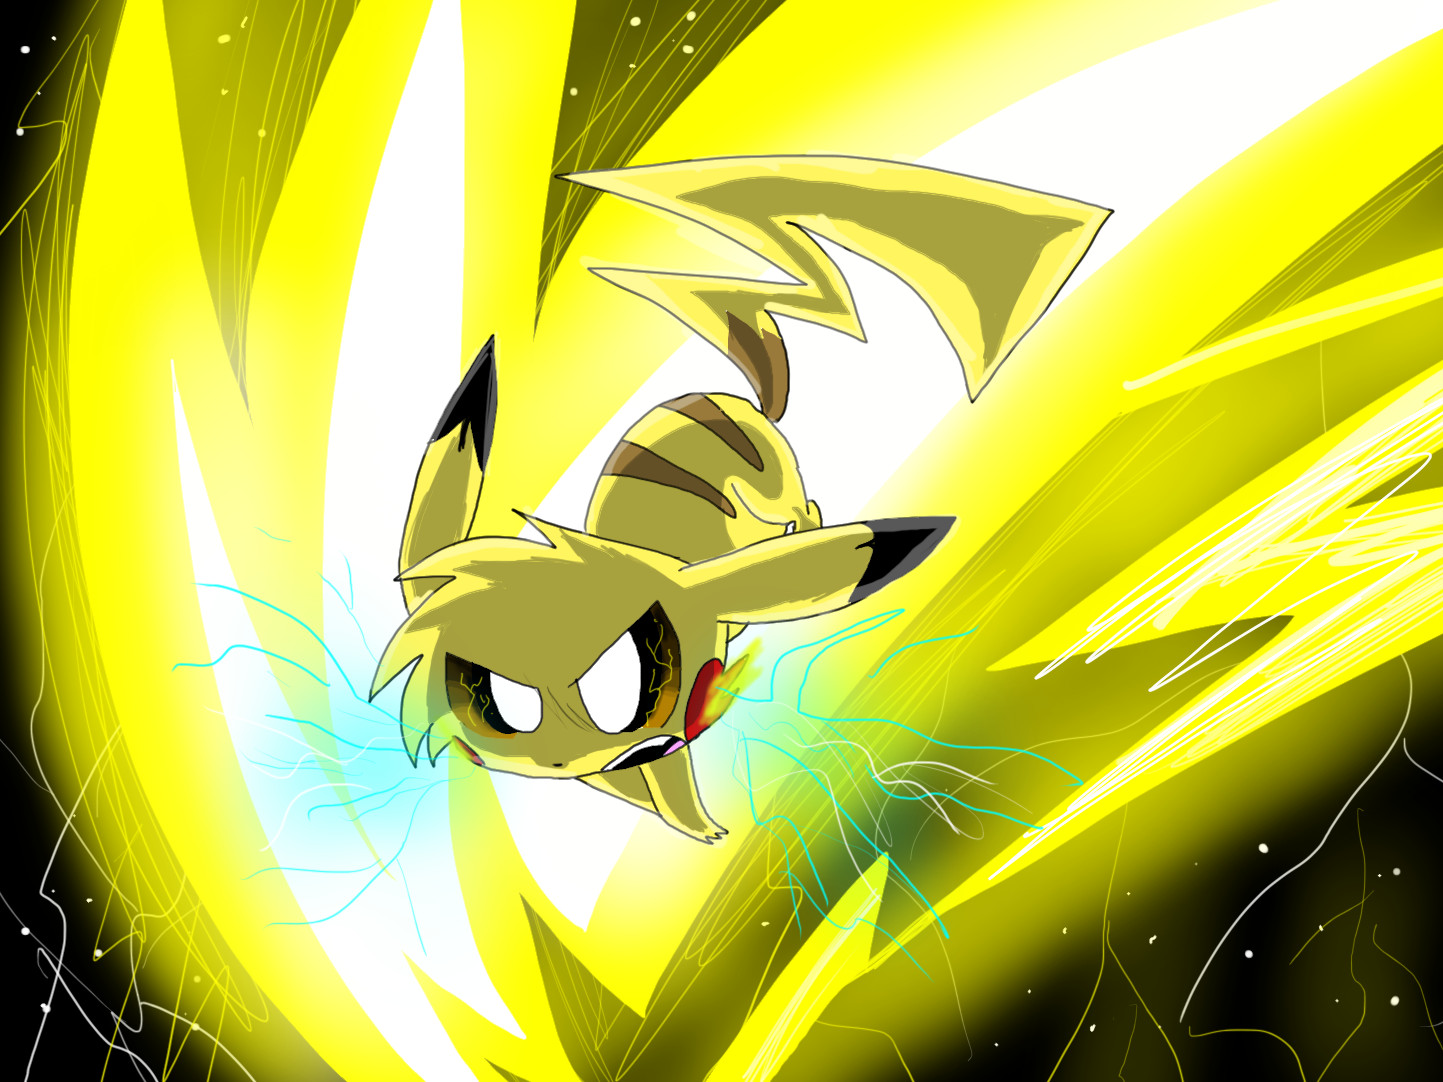 Pikachu Use Thunderbolt by KaziaBlaze on DeviantArt